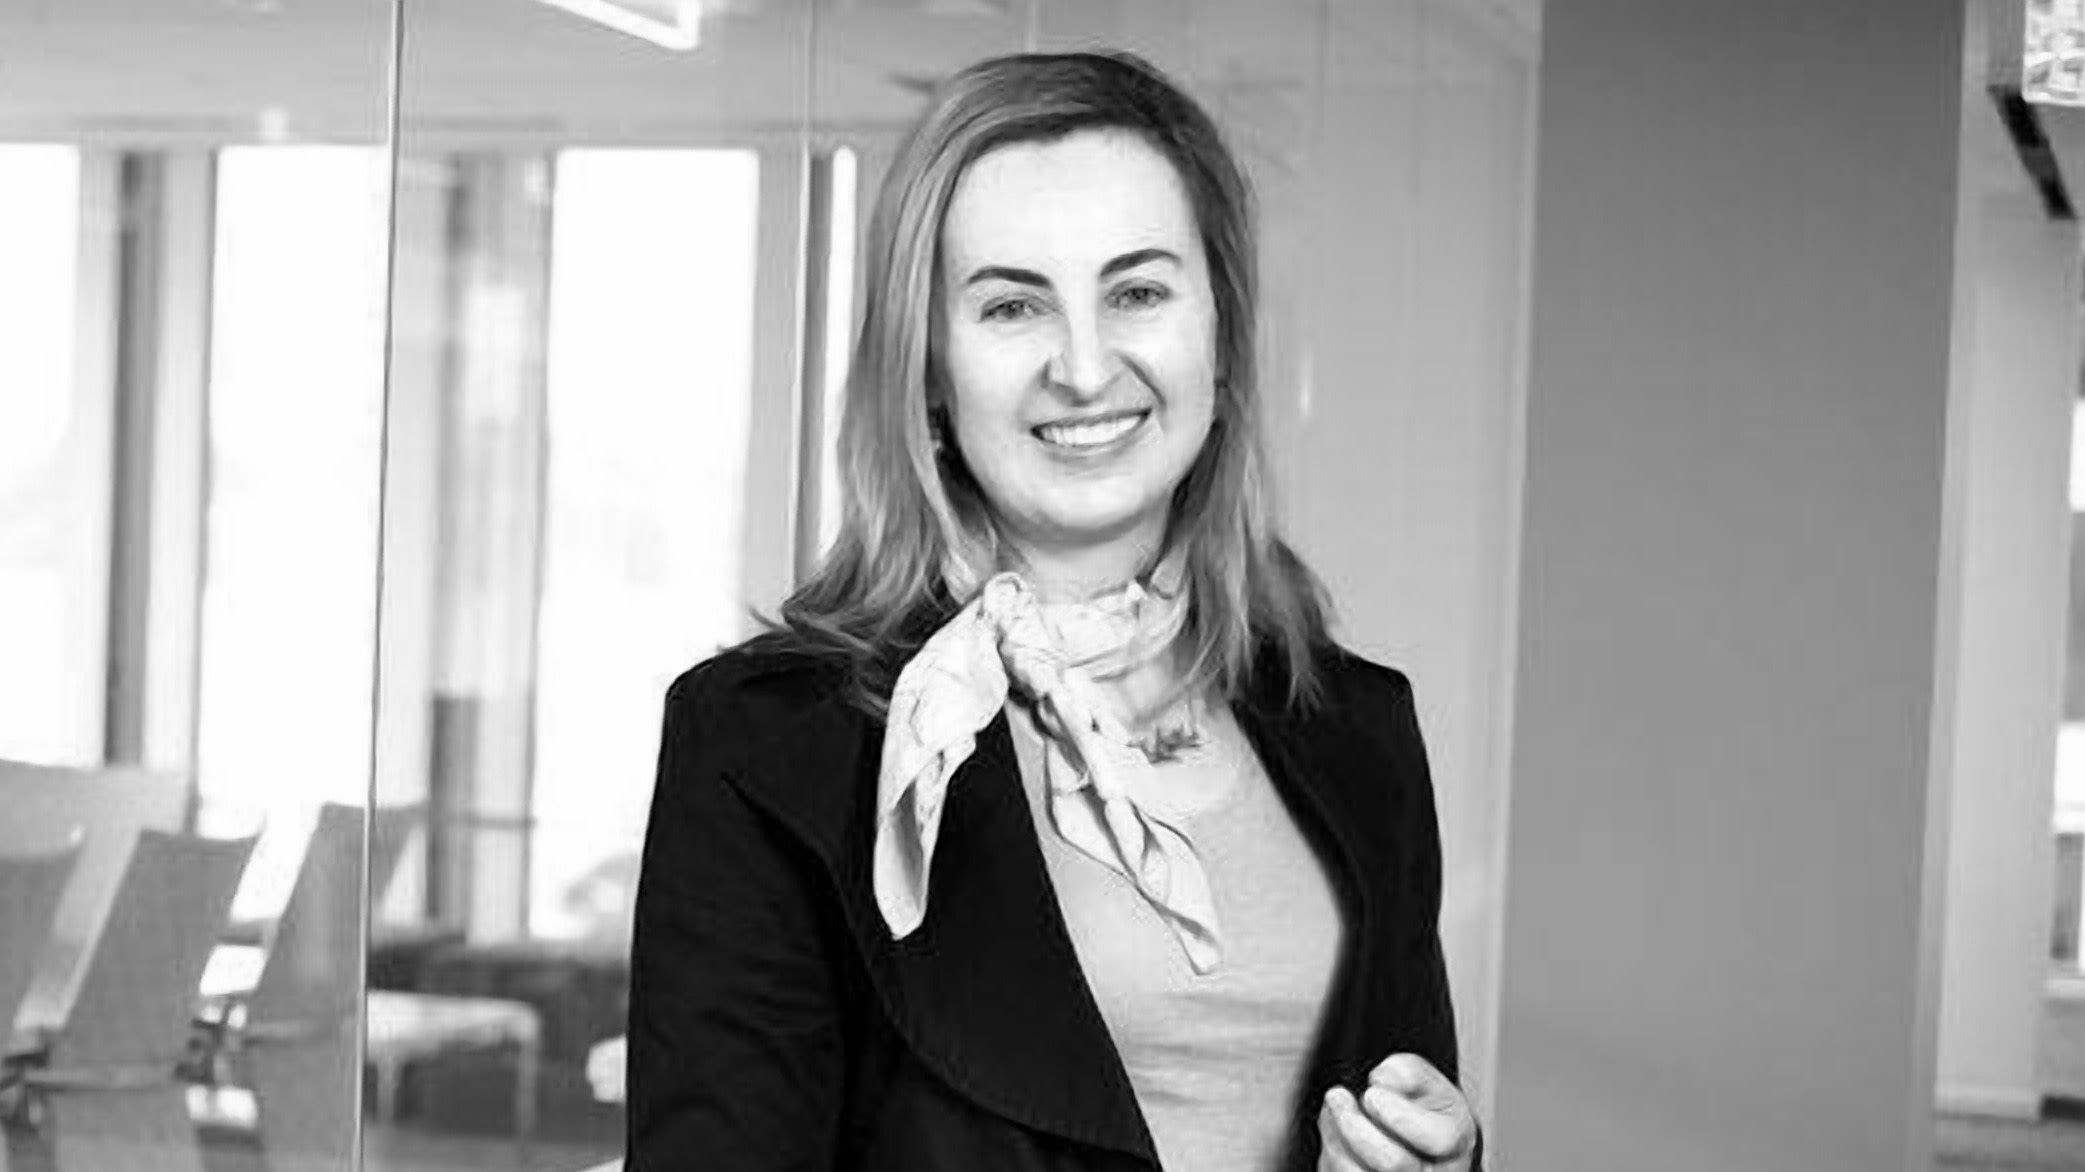 KnowESG_Fieldfisher Hires ESG Expert Nicole Bigby as Director